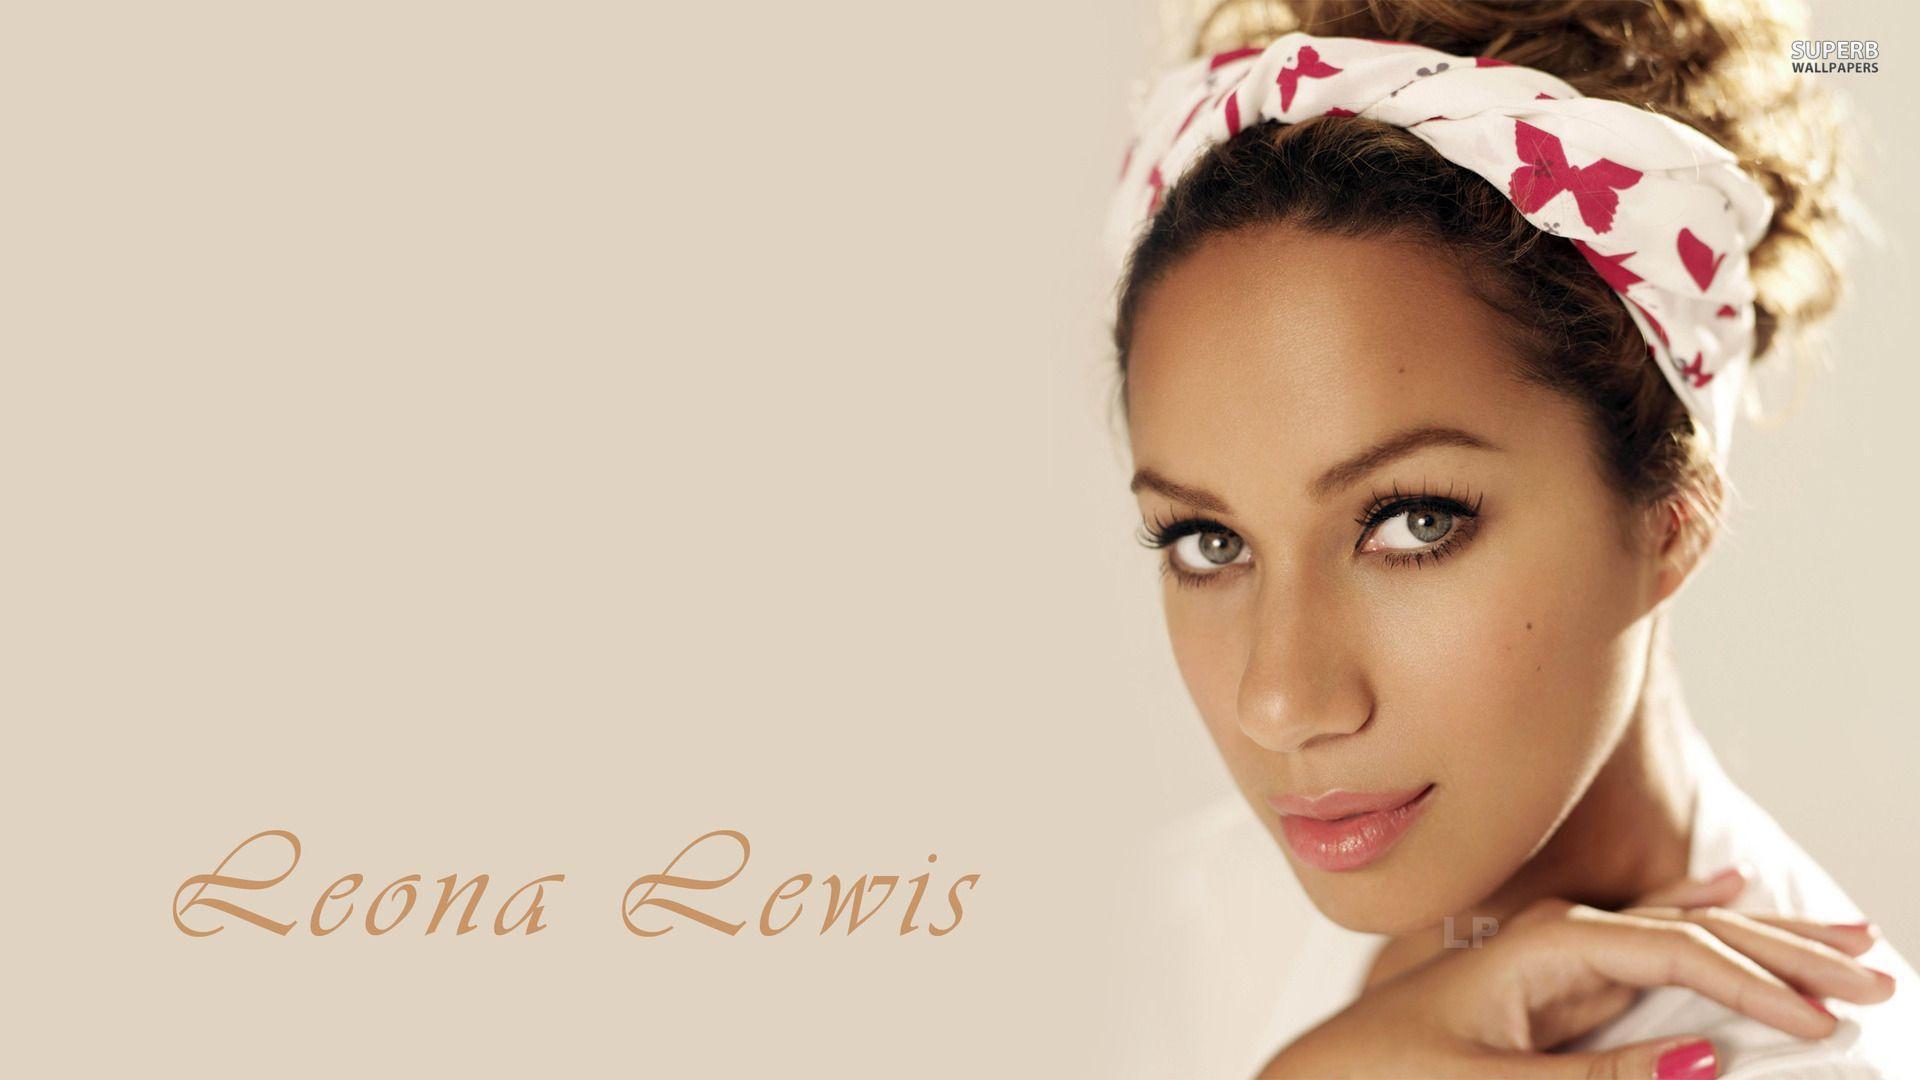 Leona Lewis wallpaper wallpaper - #